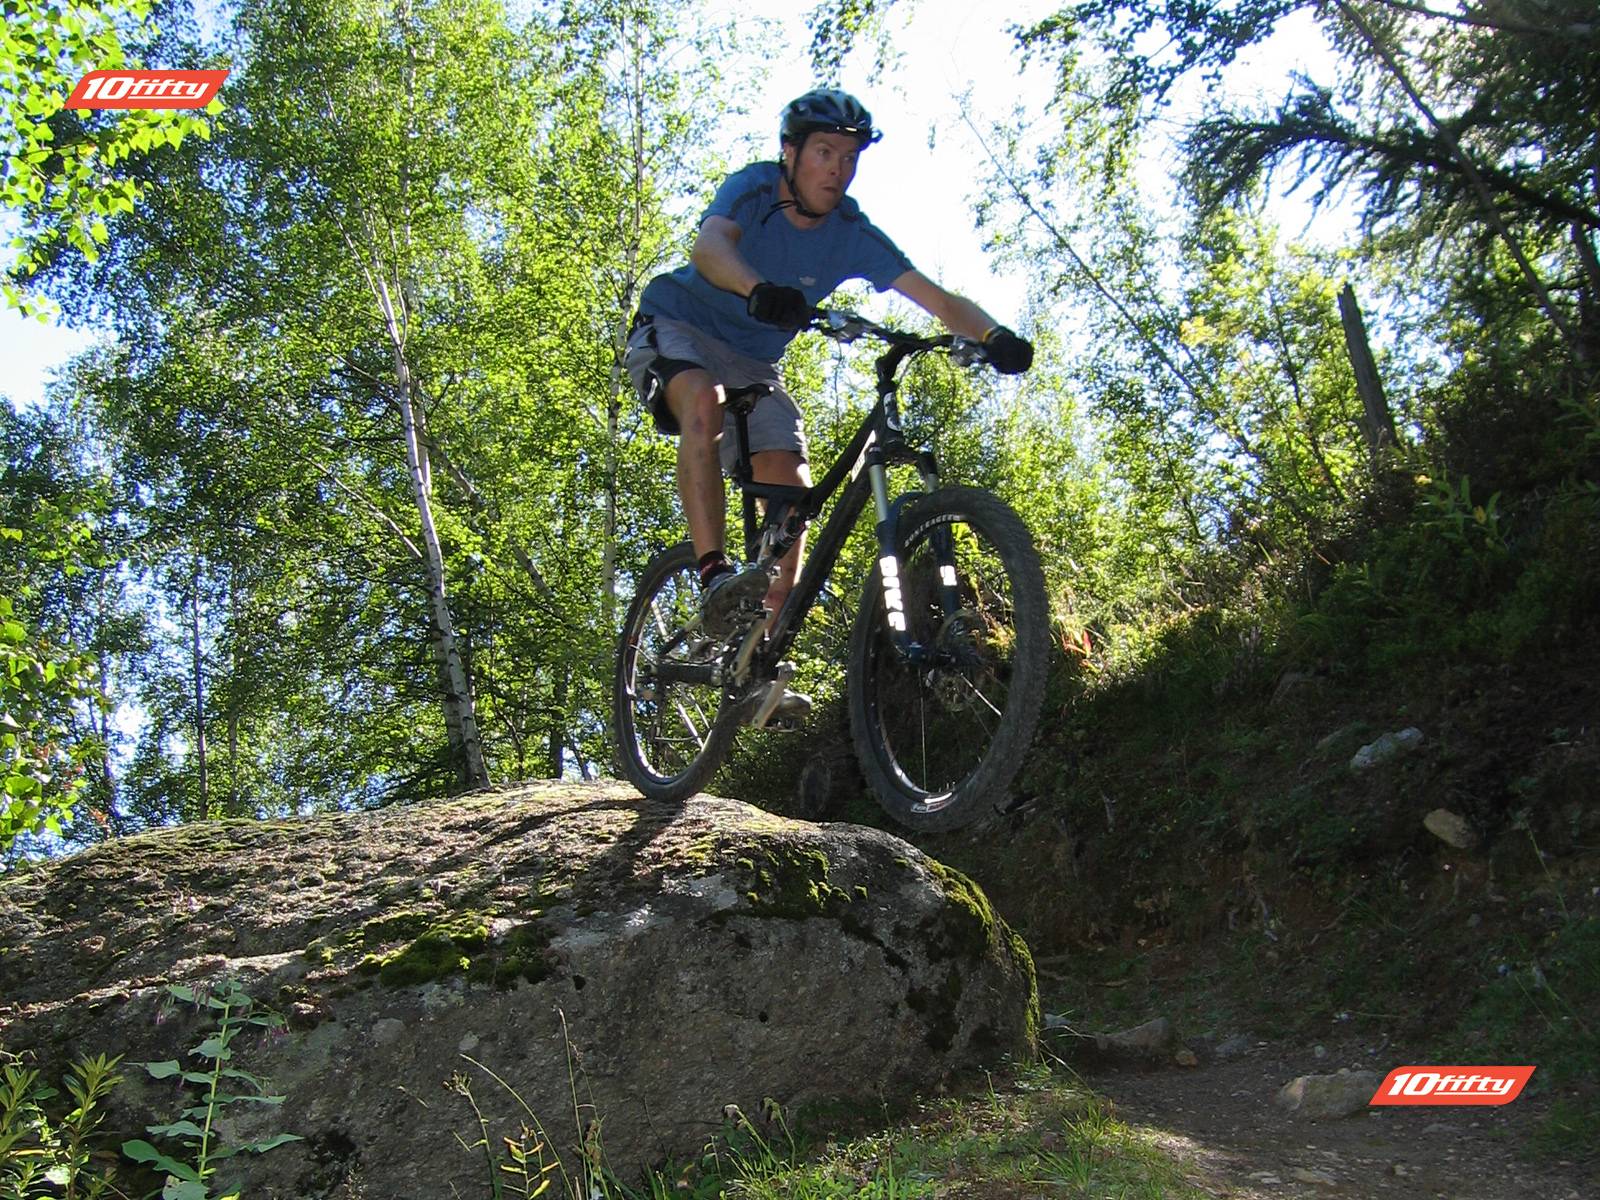 Mountain Bike Holidays, Chamonix - France and USA from 10fifty